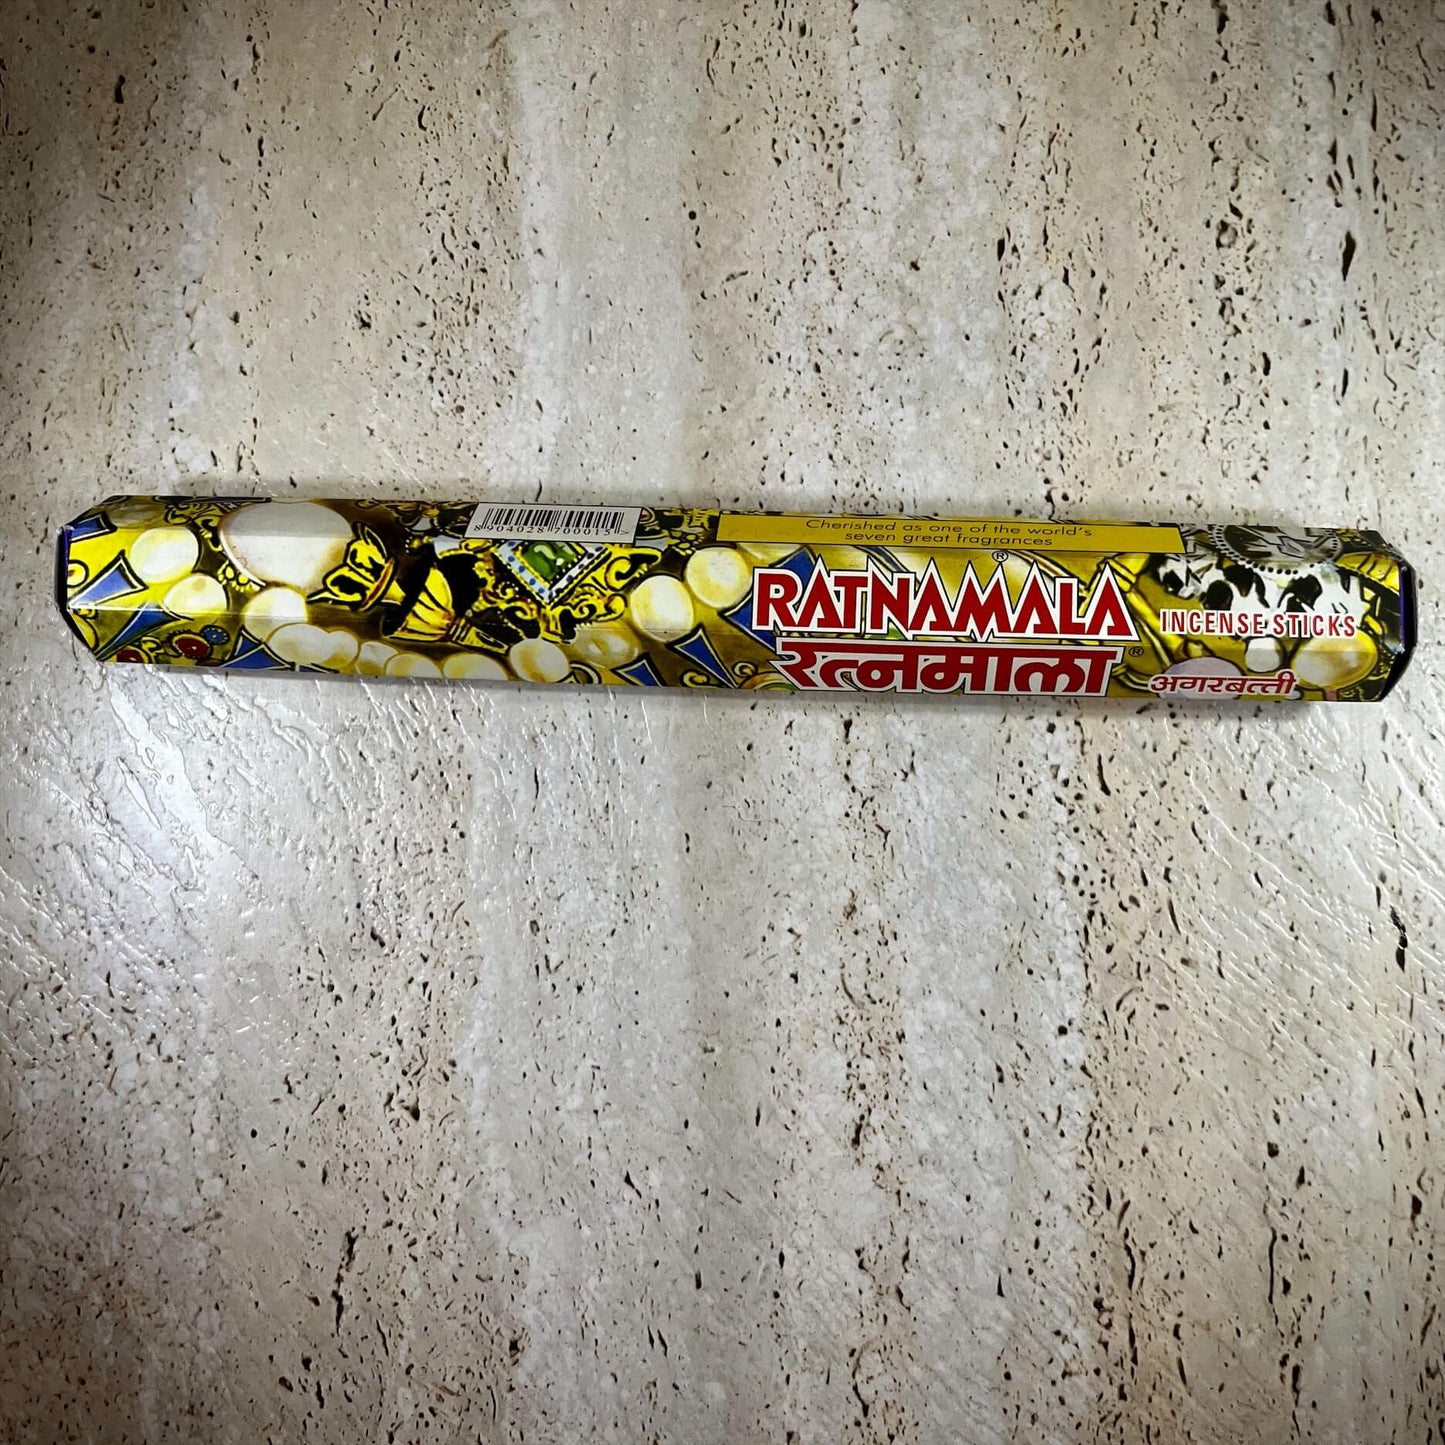 Ratnamala Hex Incense